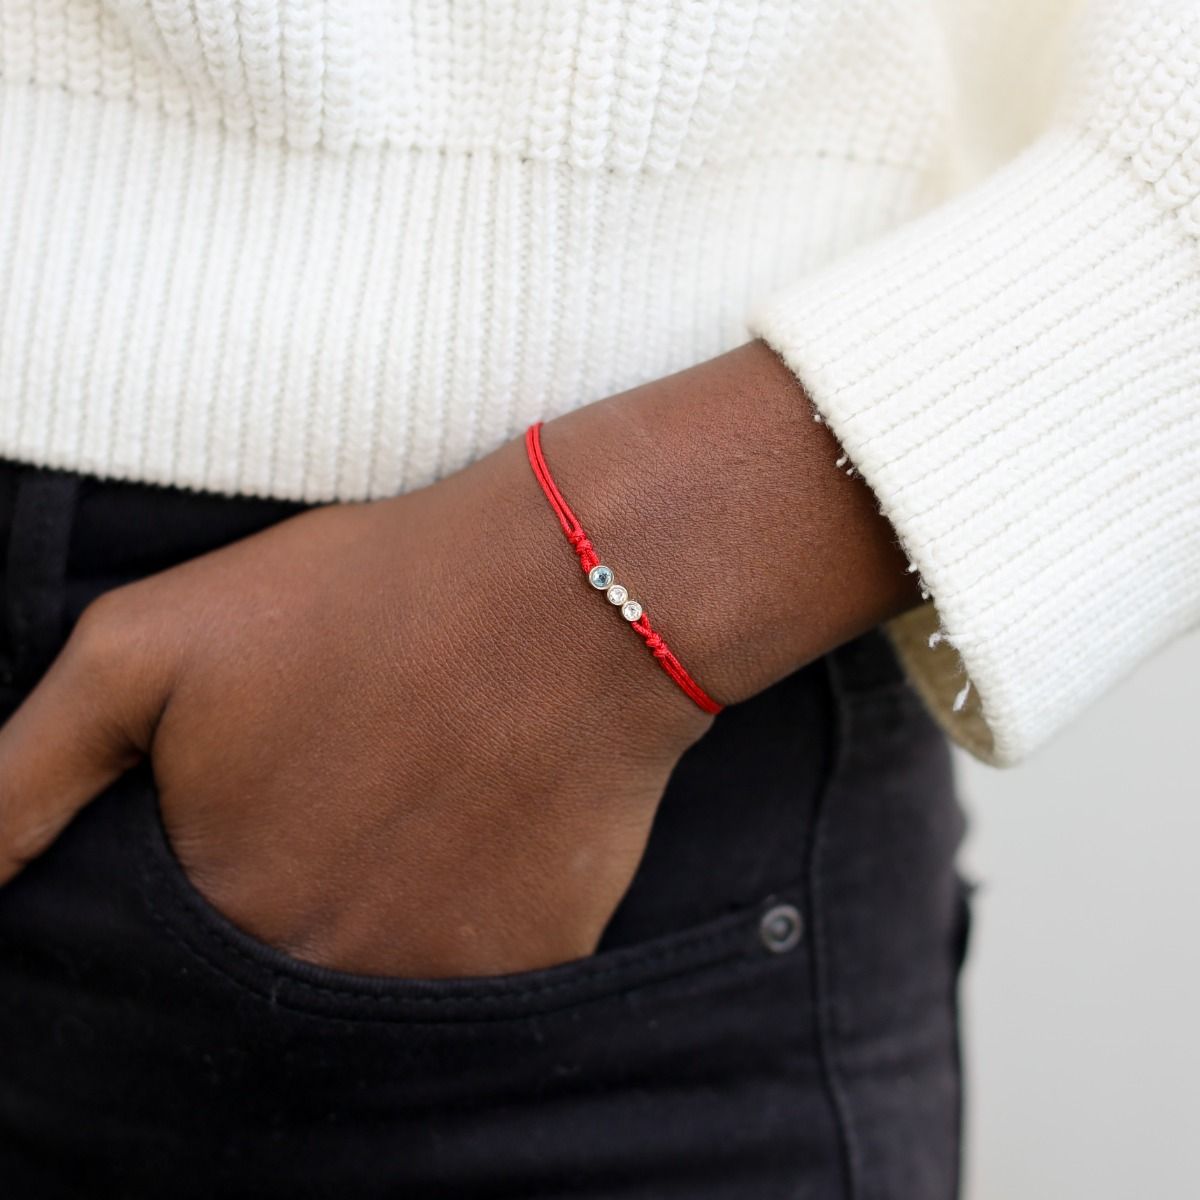 lv red string bracelet